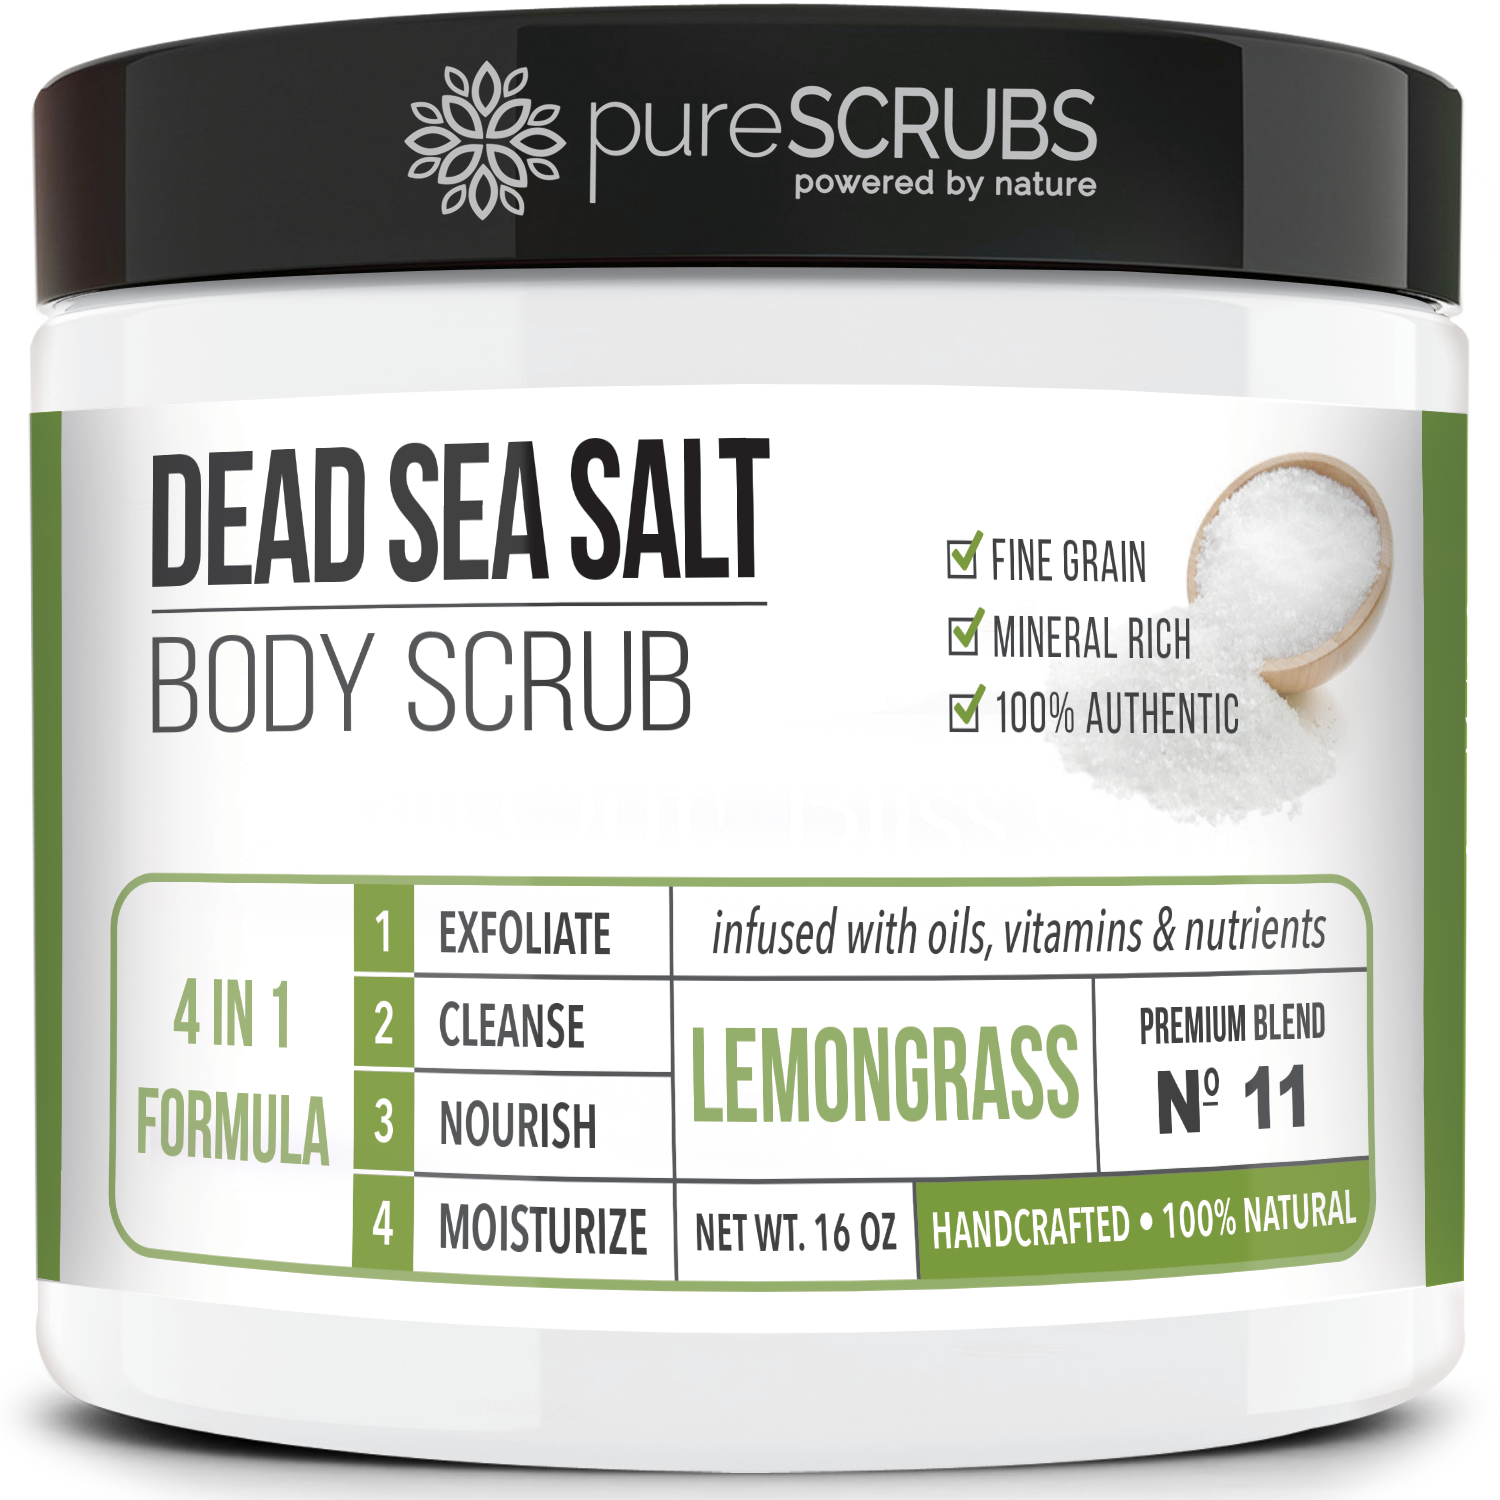 Lemongrass Body Scrub / Dead Sea Salt / Premium Blend #11